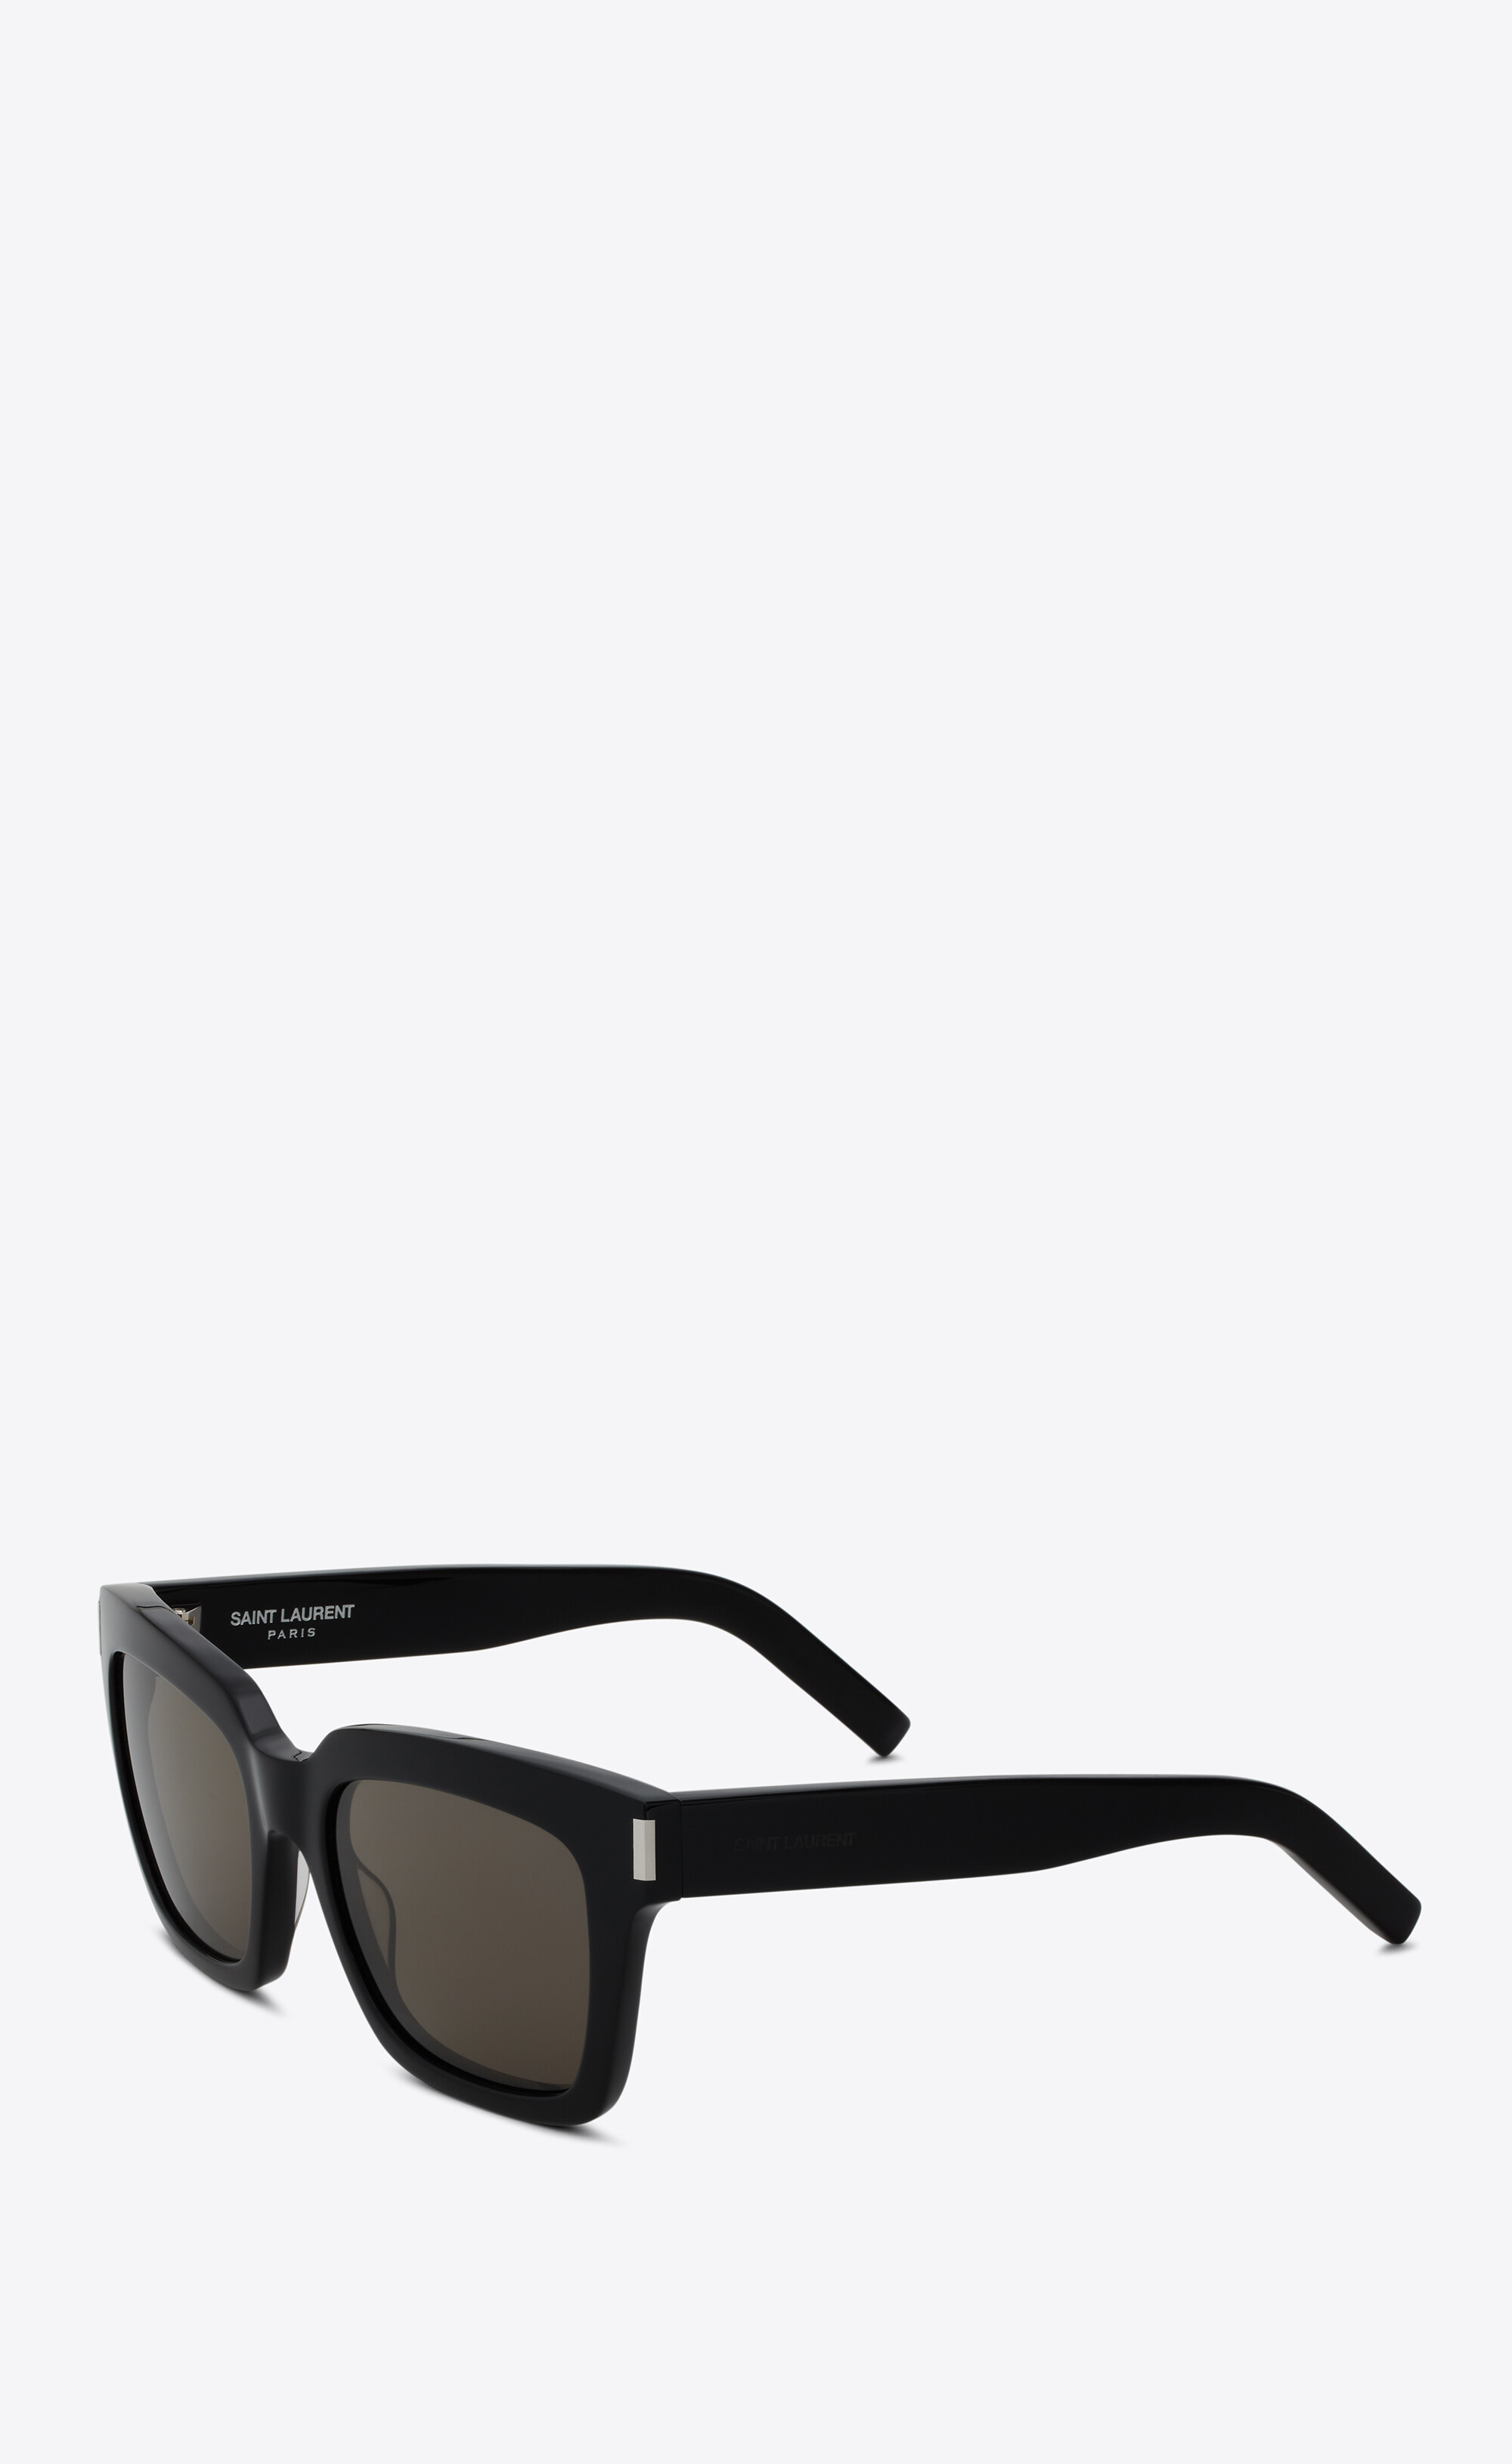 Saint Laurent Sunglasses for Women